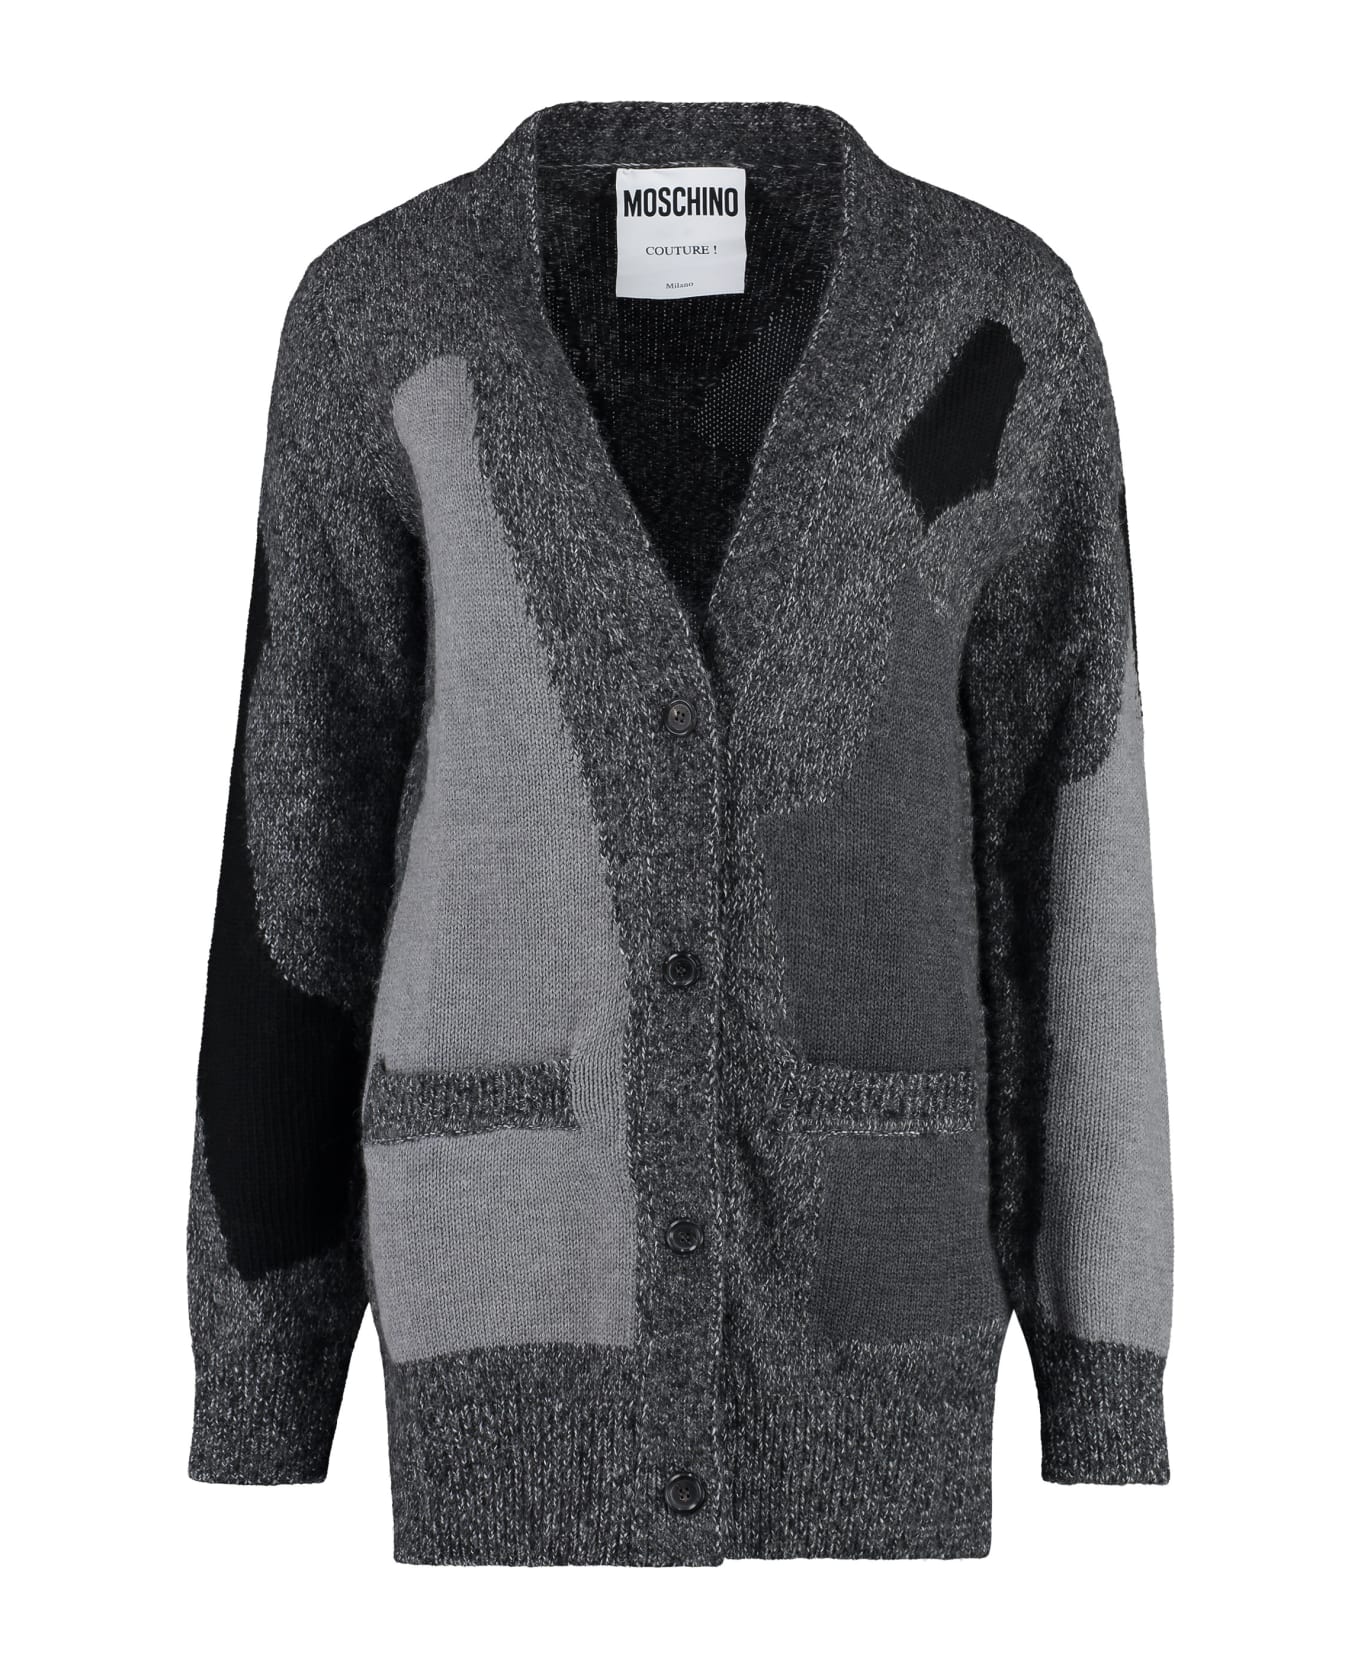 Moschino Knitted Cardigan - grey